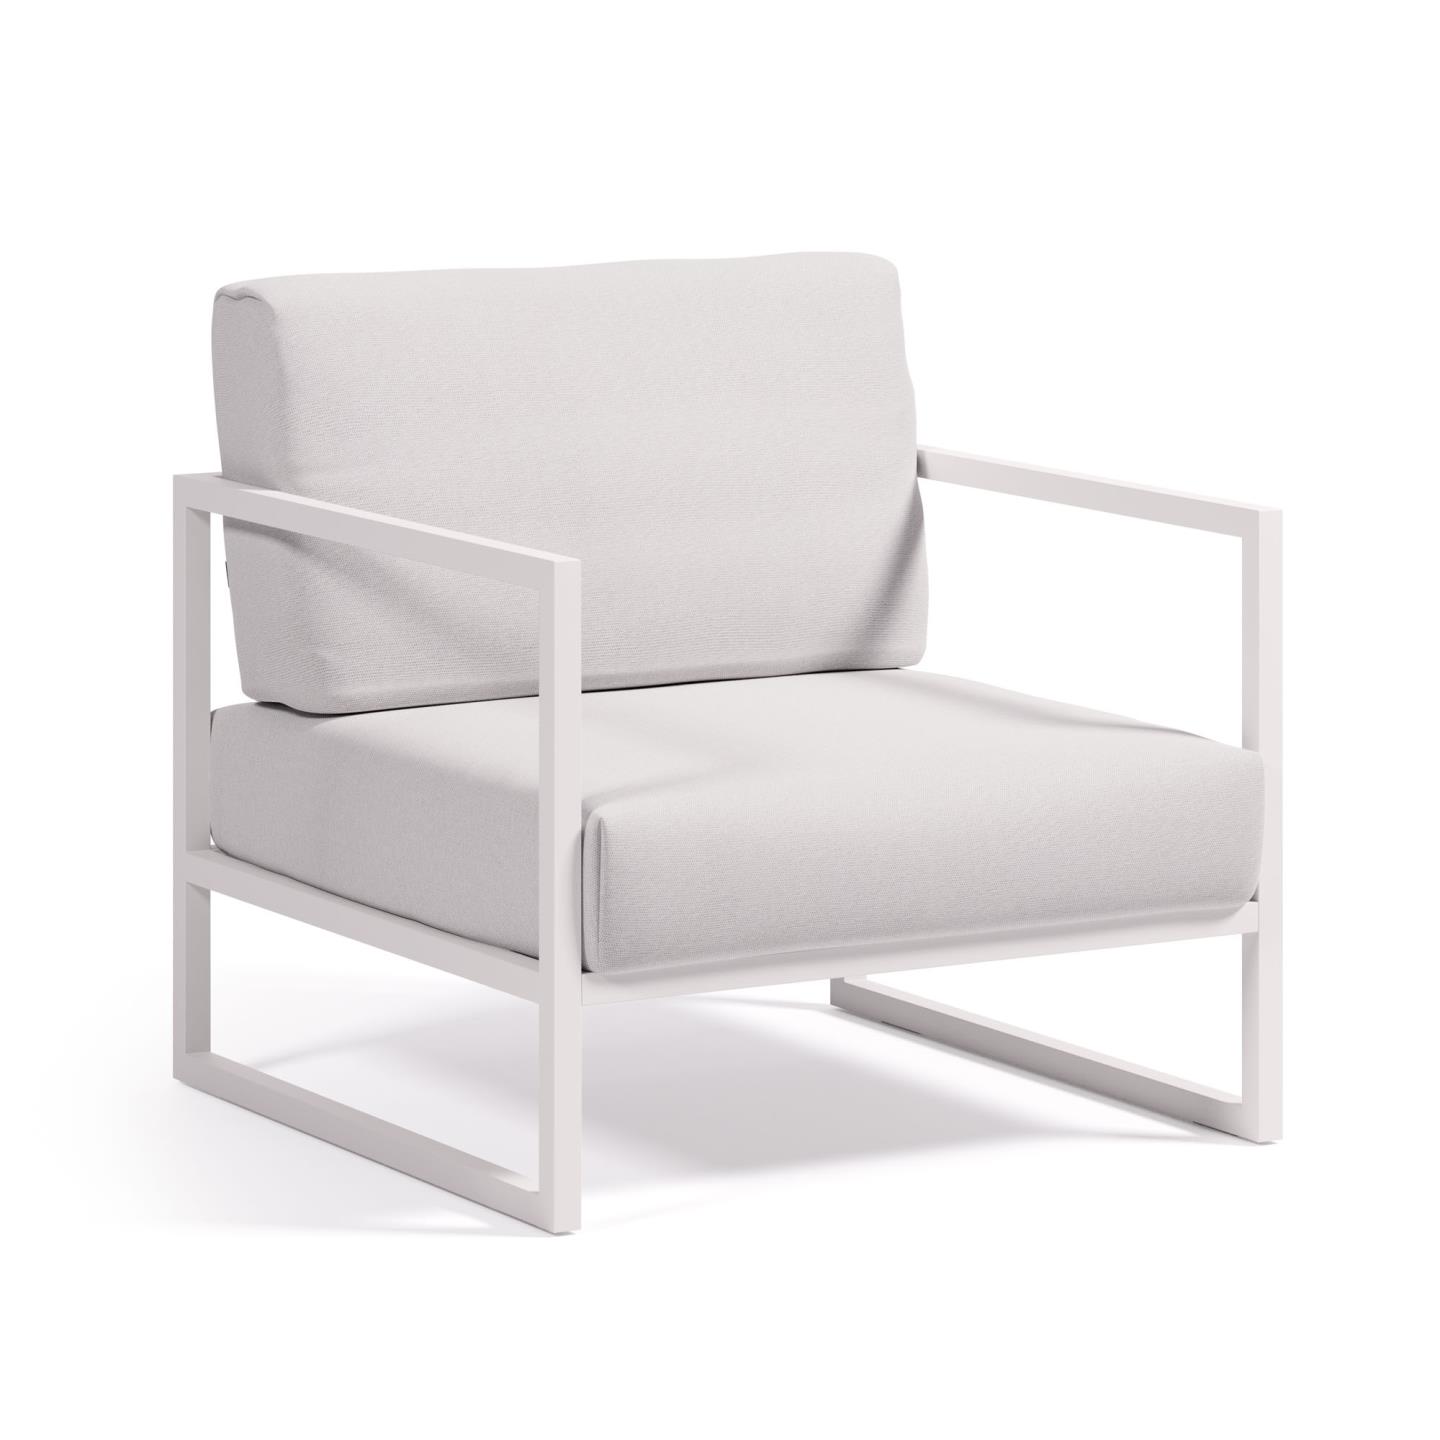 LAFORMA Comova udendørs lænestol, m. armlæn - hvid stof og hvid aluminium thumbnail